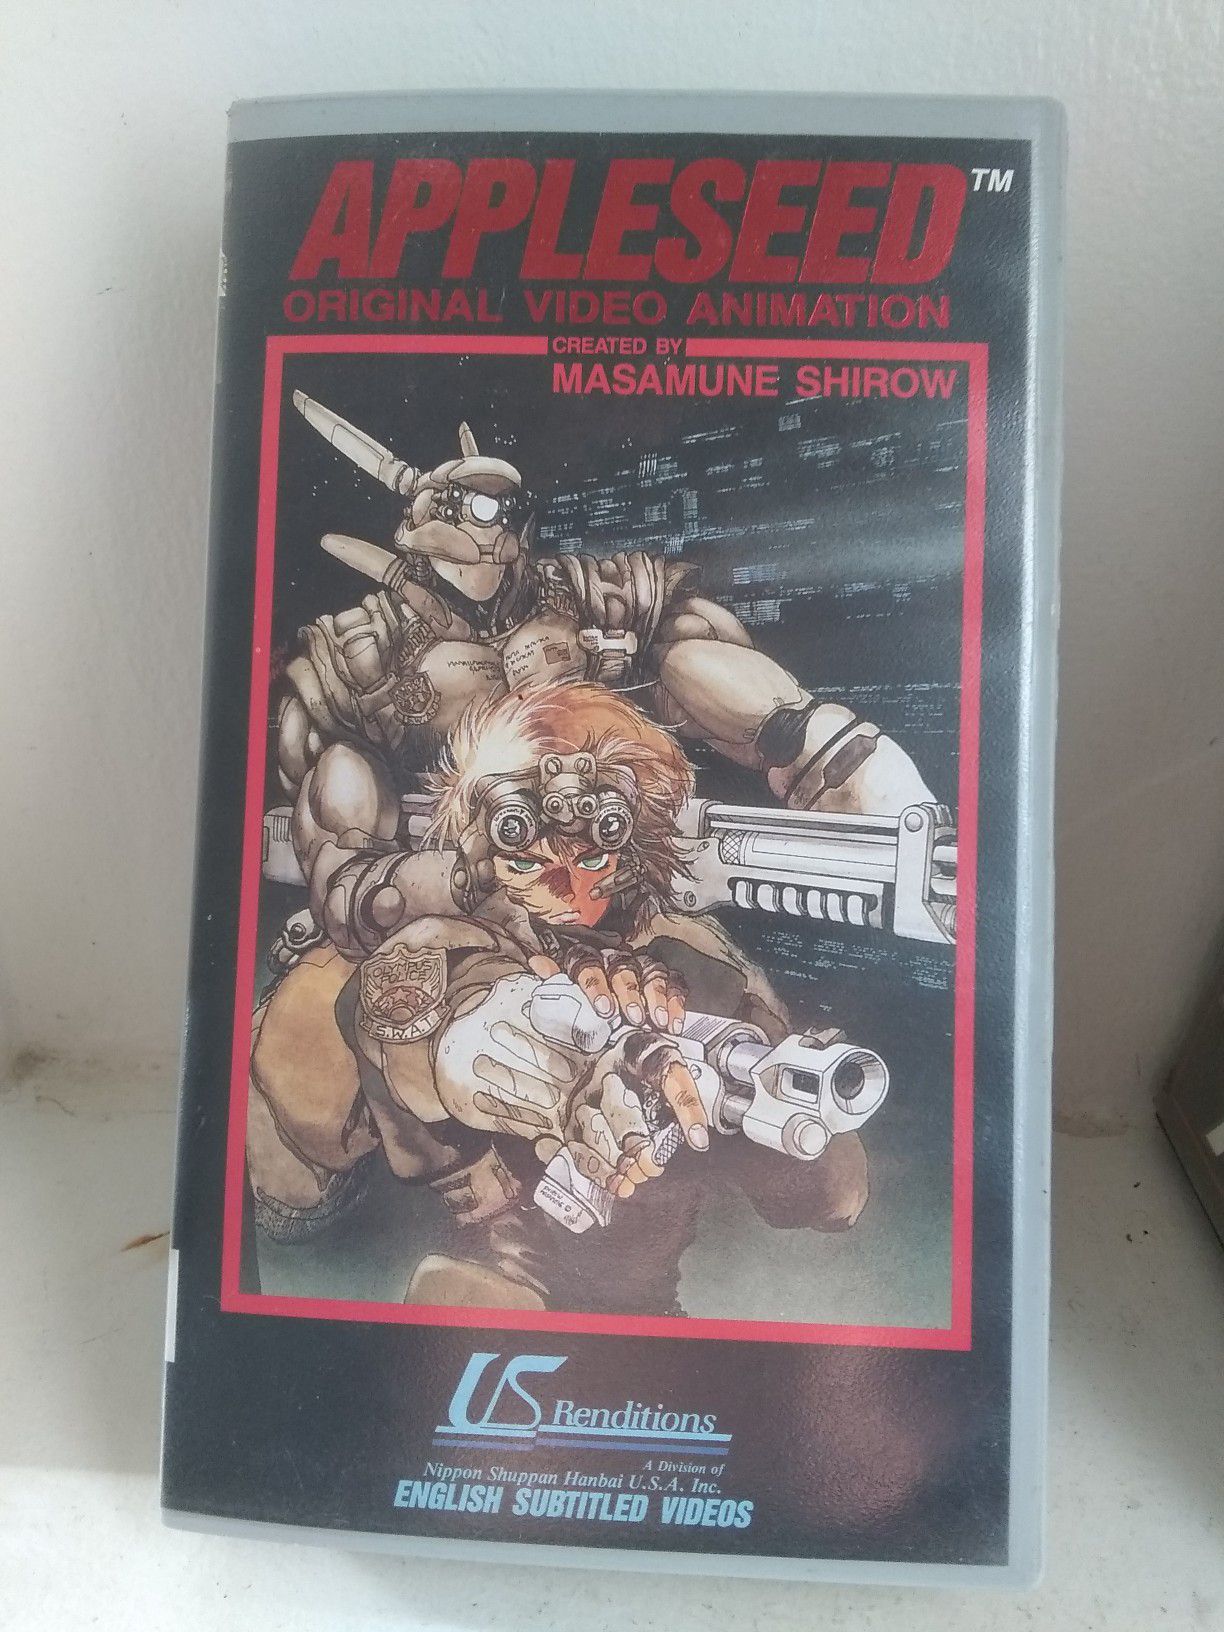 Appleseed (VHS, 1991) U.S. Renditions Cyberpunk Anime VHS Masamune Shirow